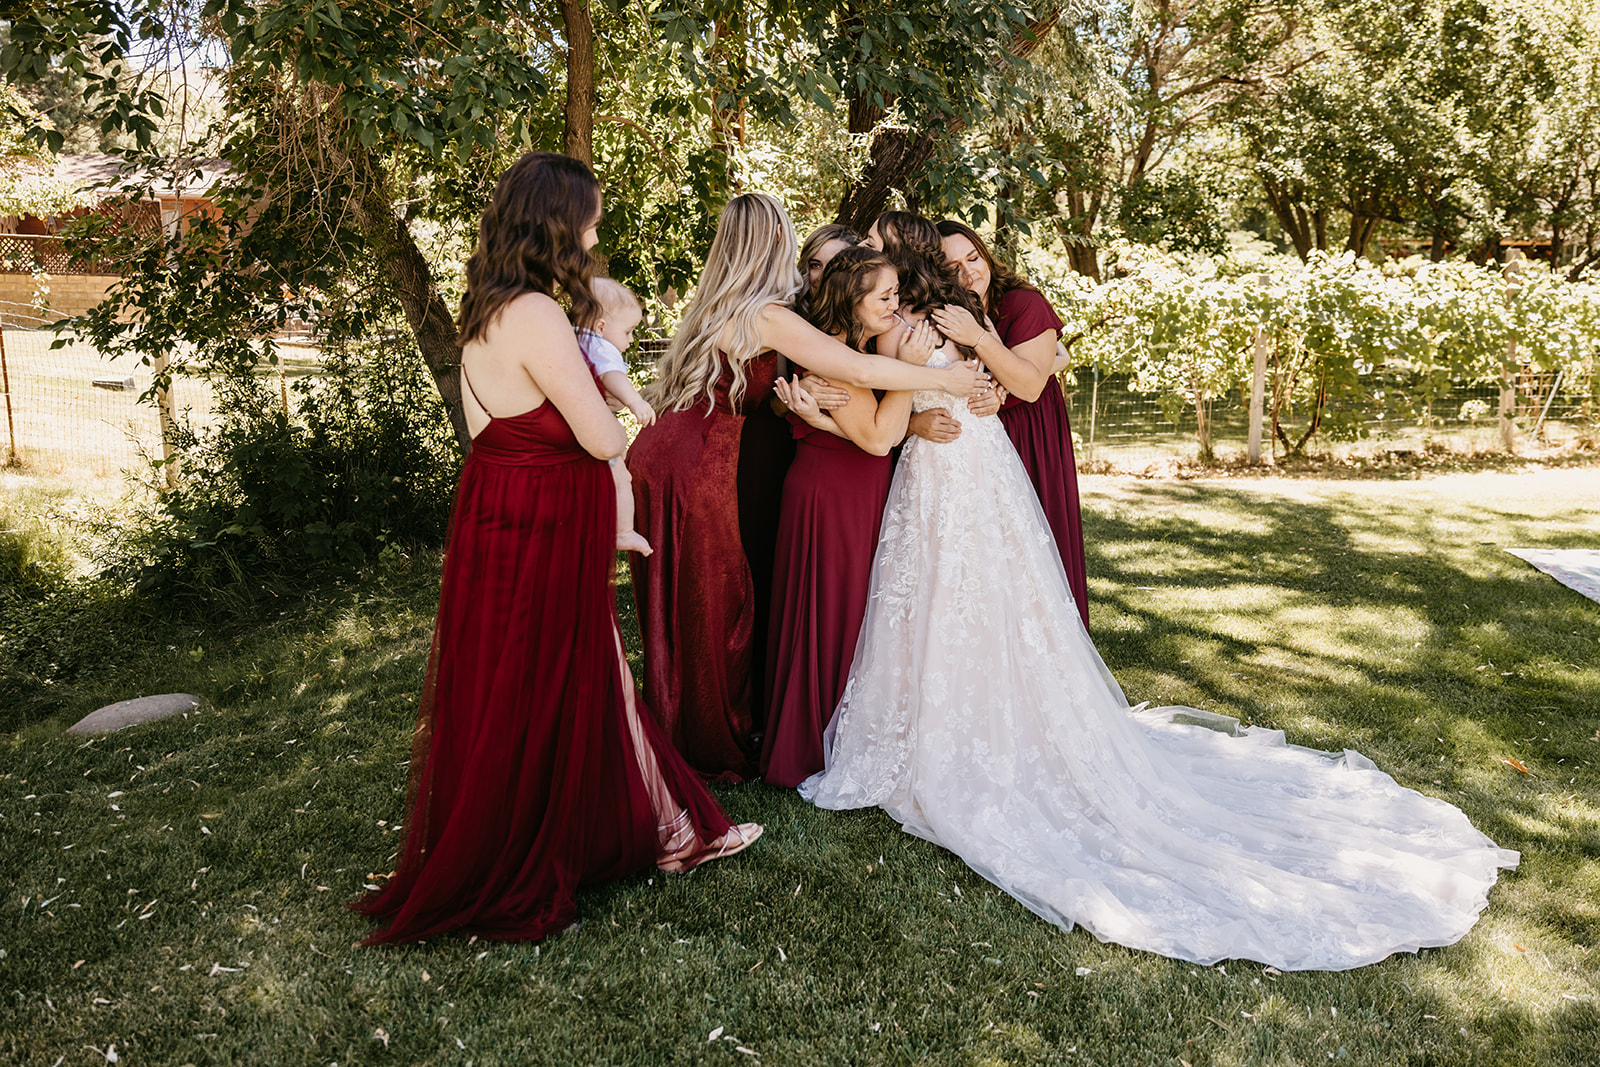 Bride revealing her wedding dress to her bridesmaids